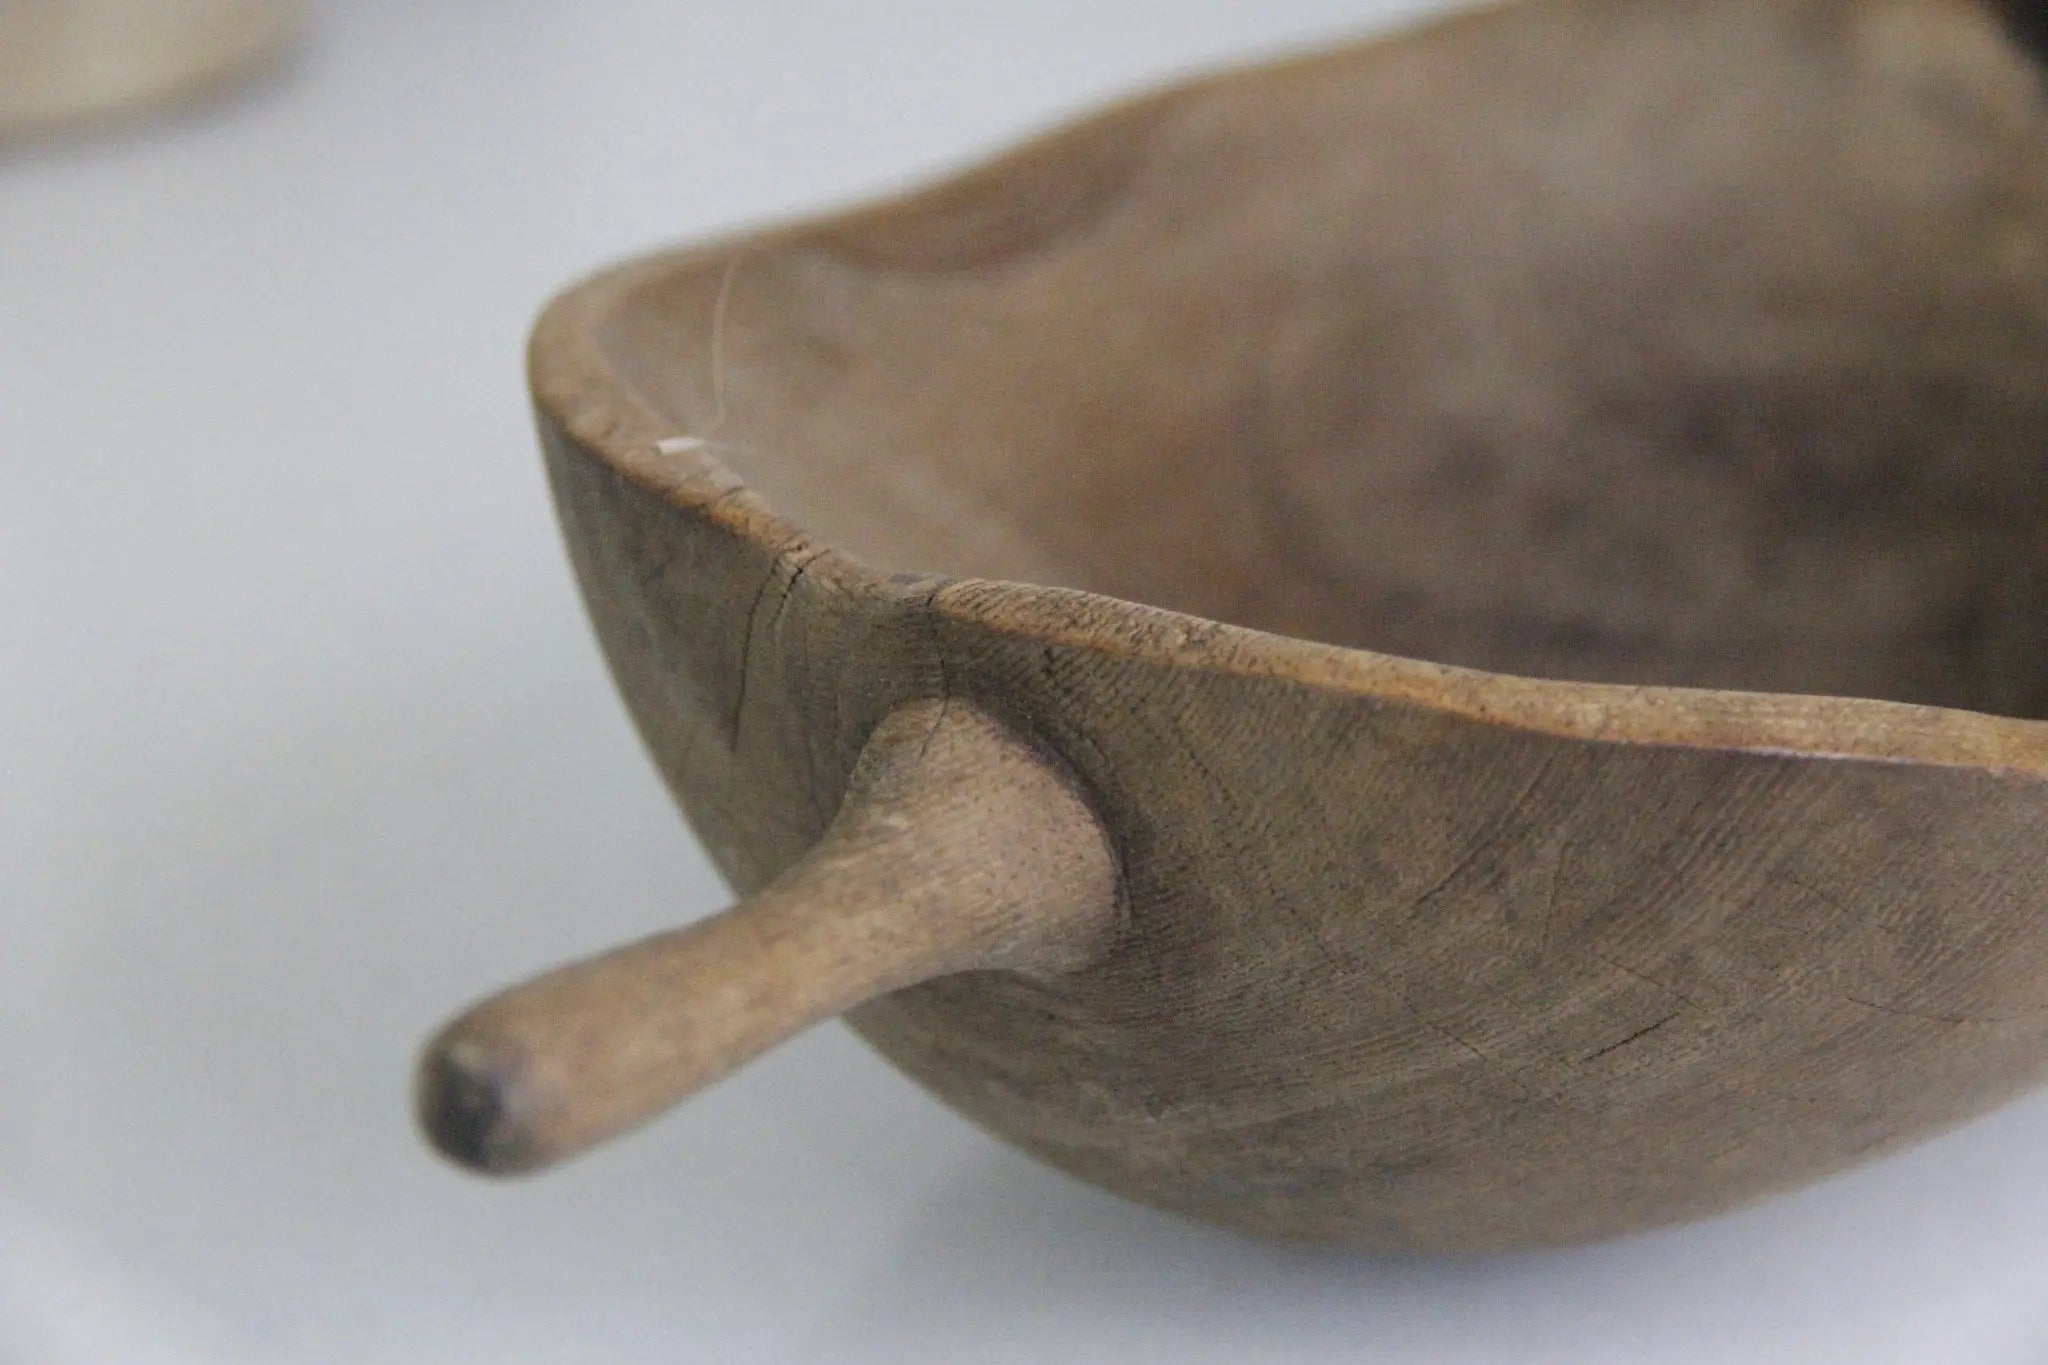 Primitive Wooden Bowl | Hand-Made  Debra Hall Lifestyle